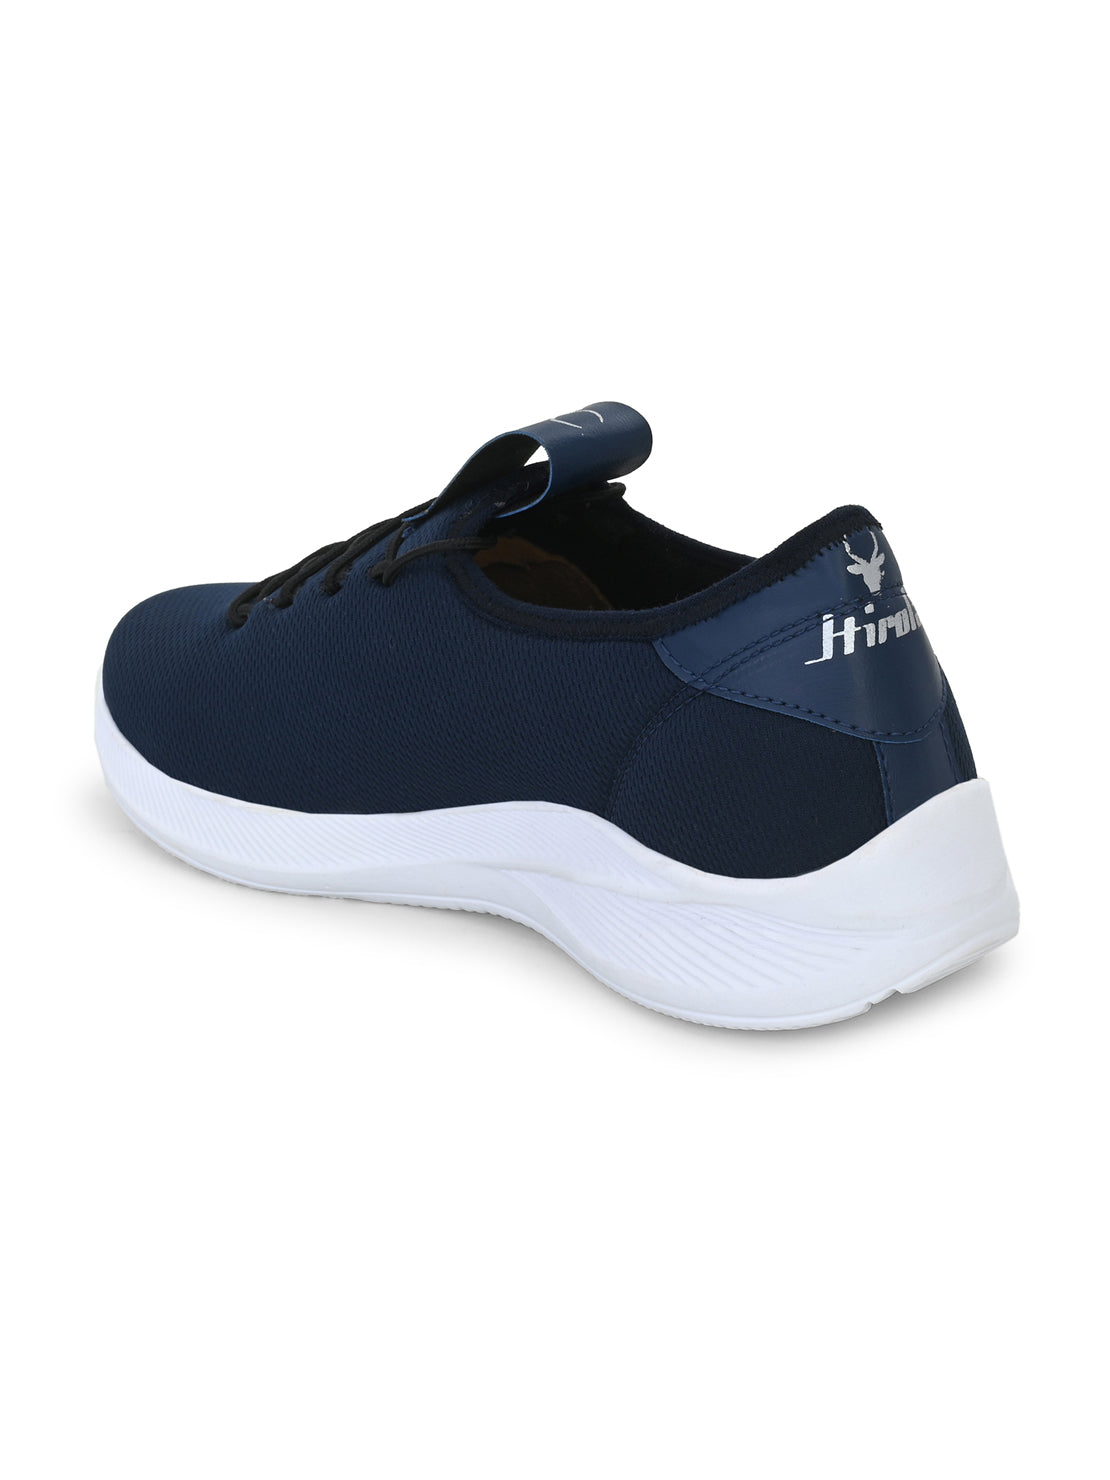 Hirolas® Men's Blue Lace Up Walking Sport Shoes (HRL1932BLU)